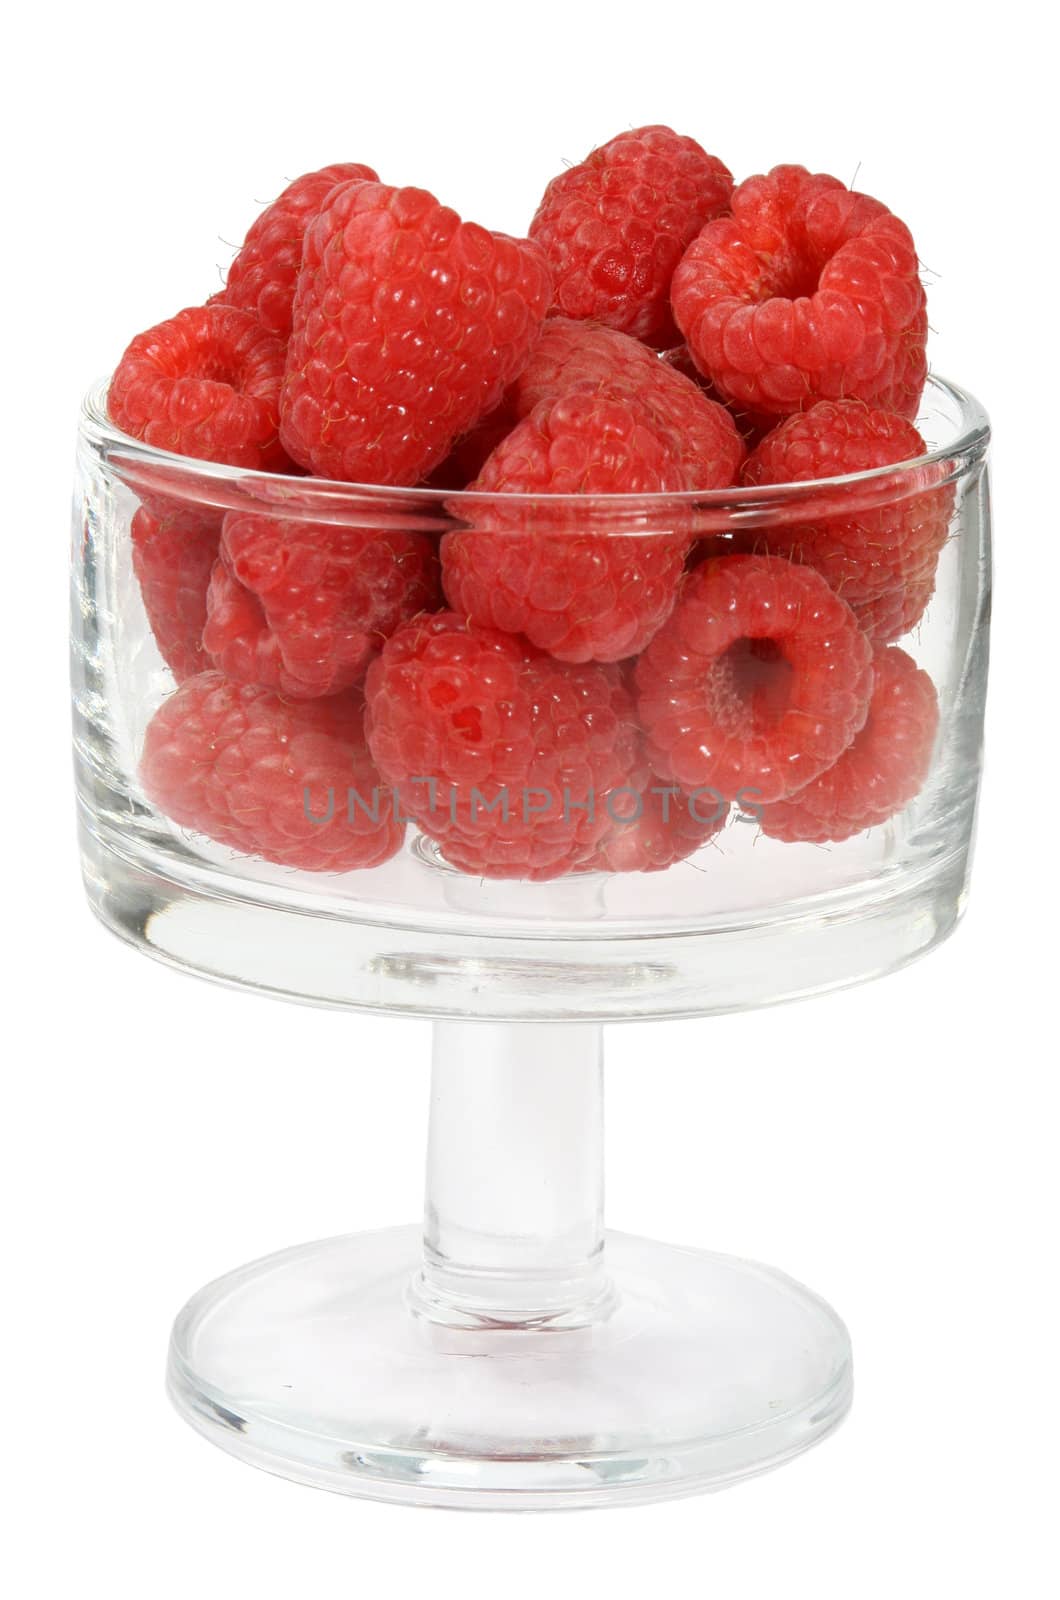 fresh raspberries in glass dish